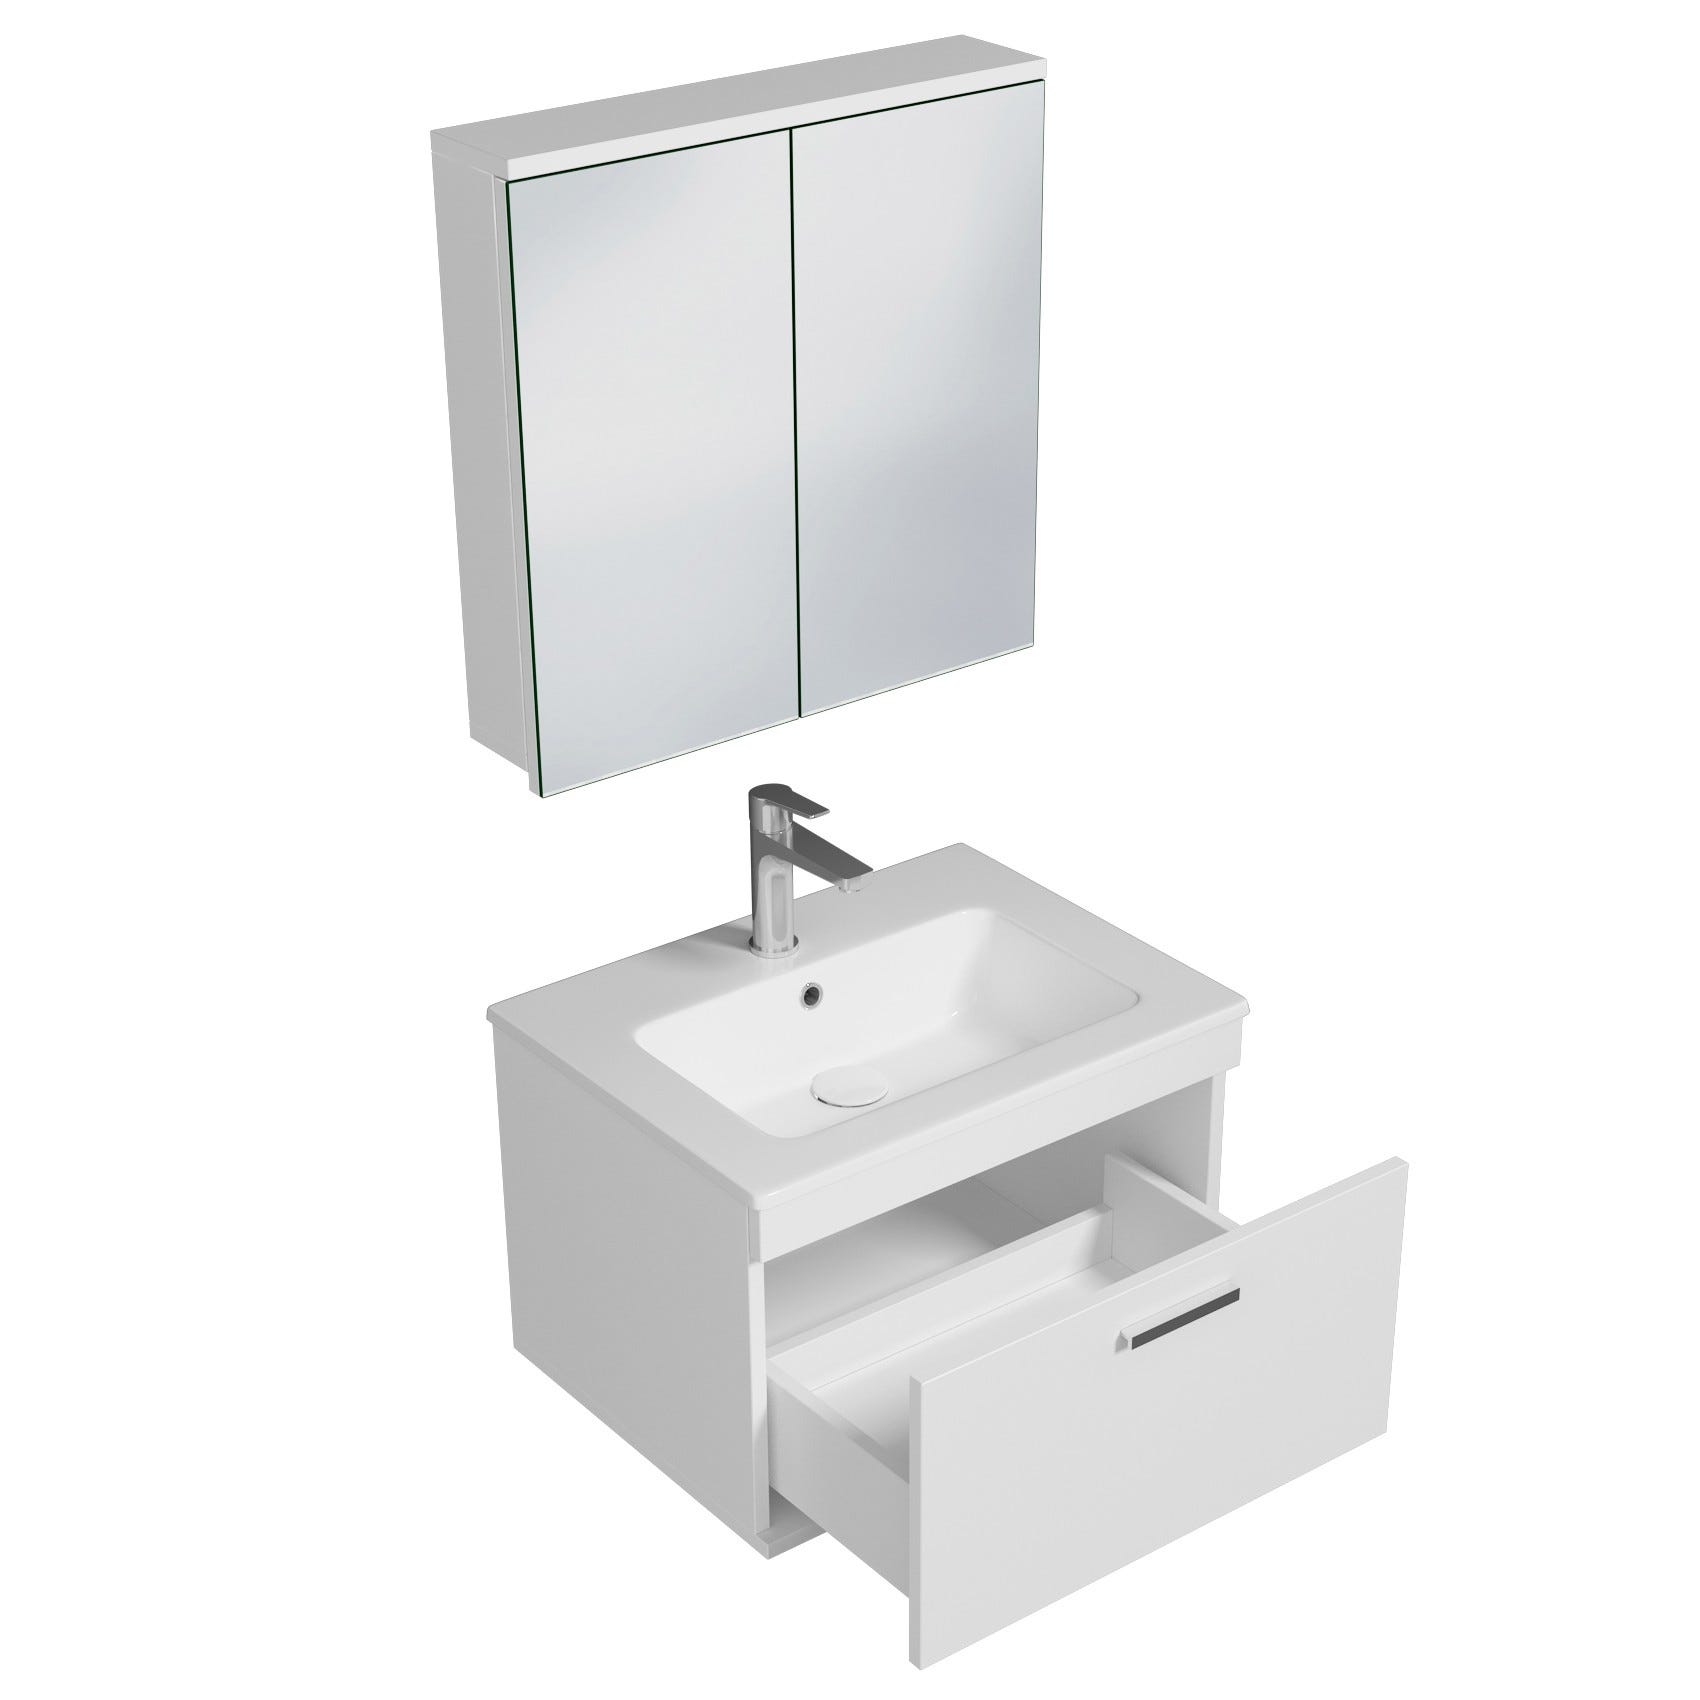 RUBITE Meuble salle de bain simple vasque 1 tiroir blanc largeur 60 cm + miroir armoire 1